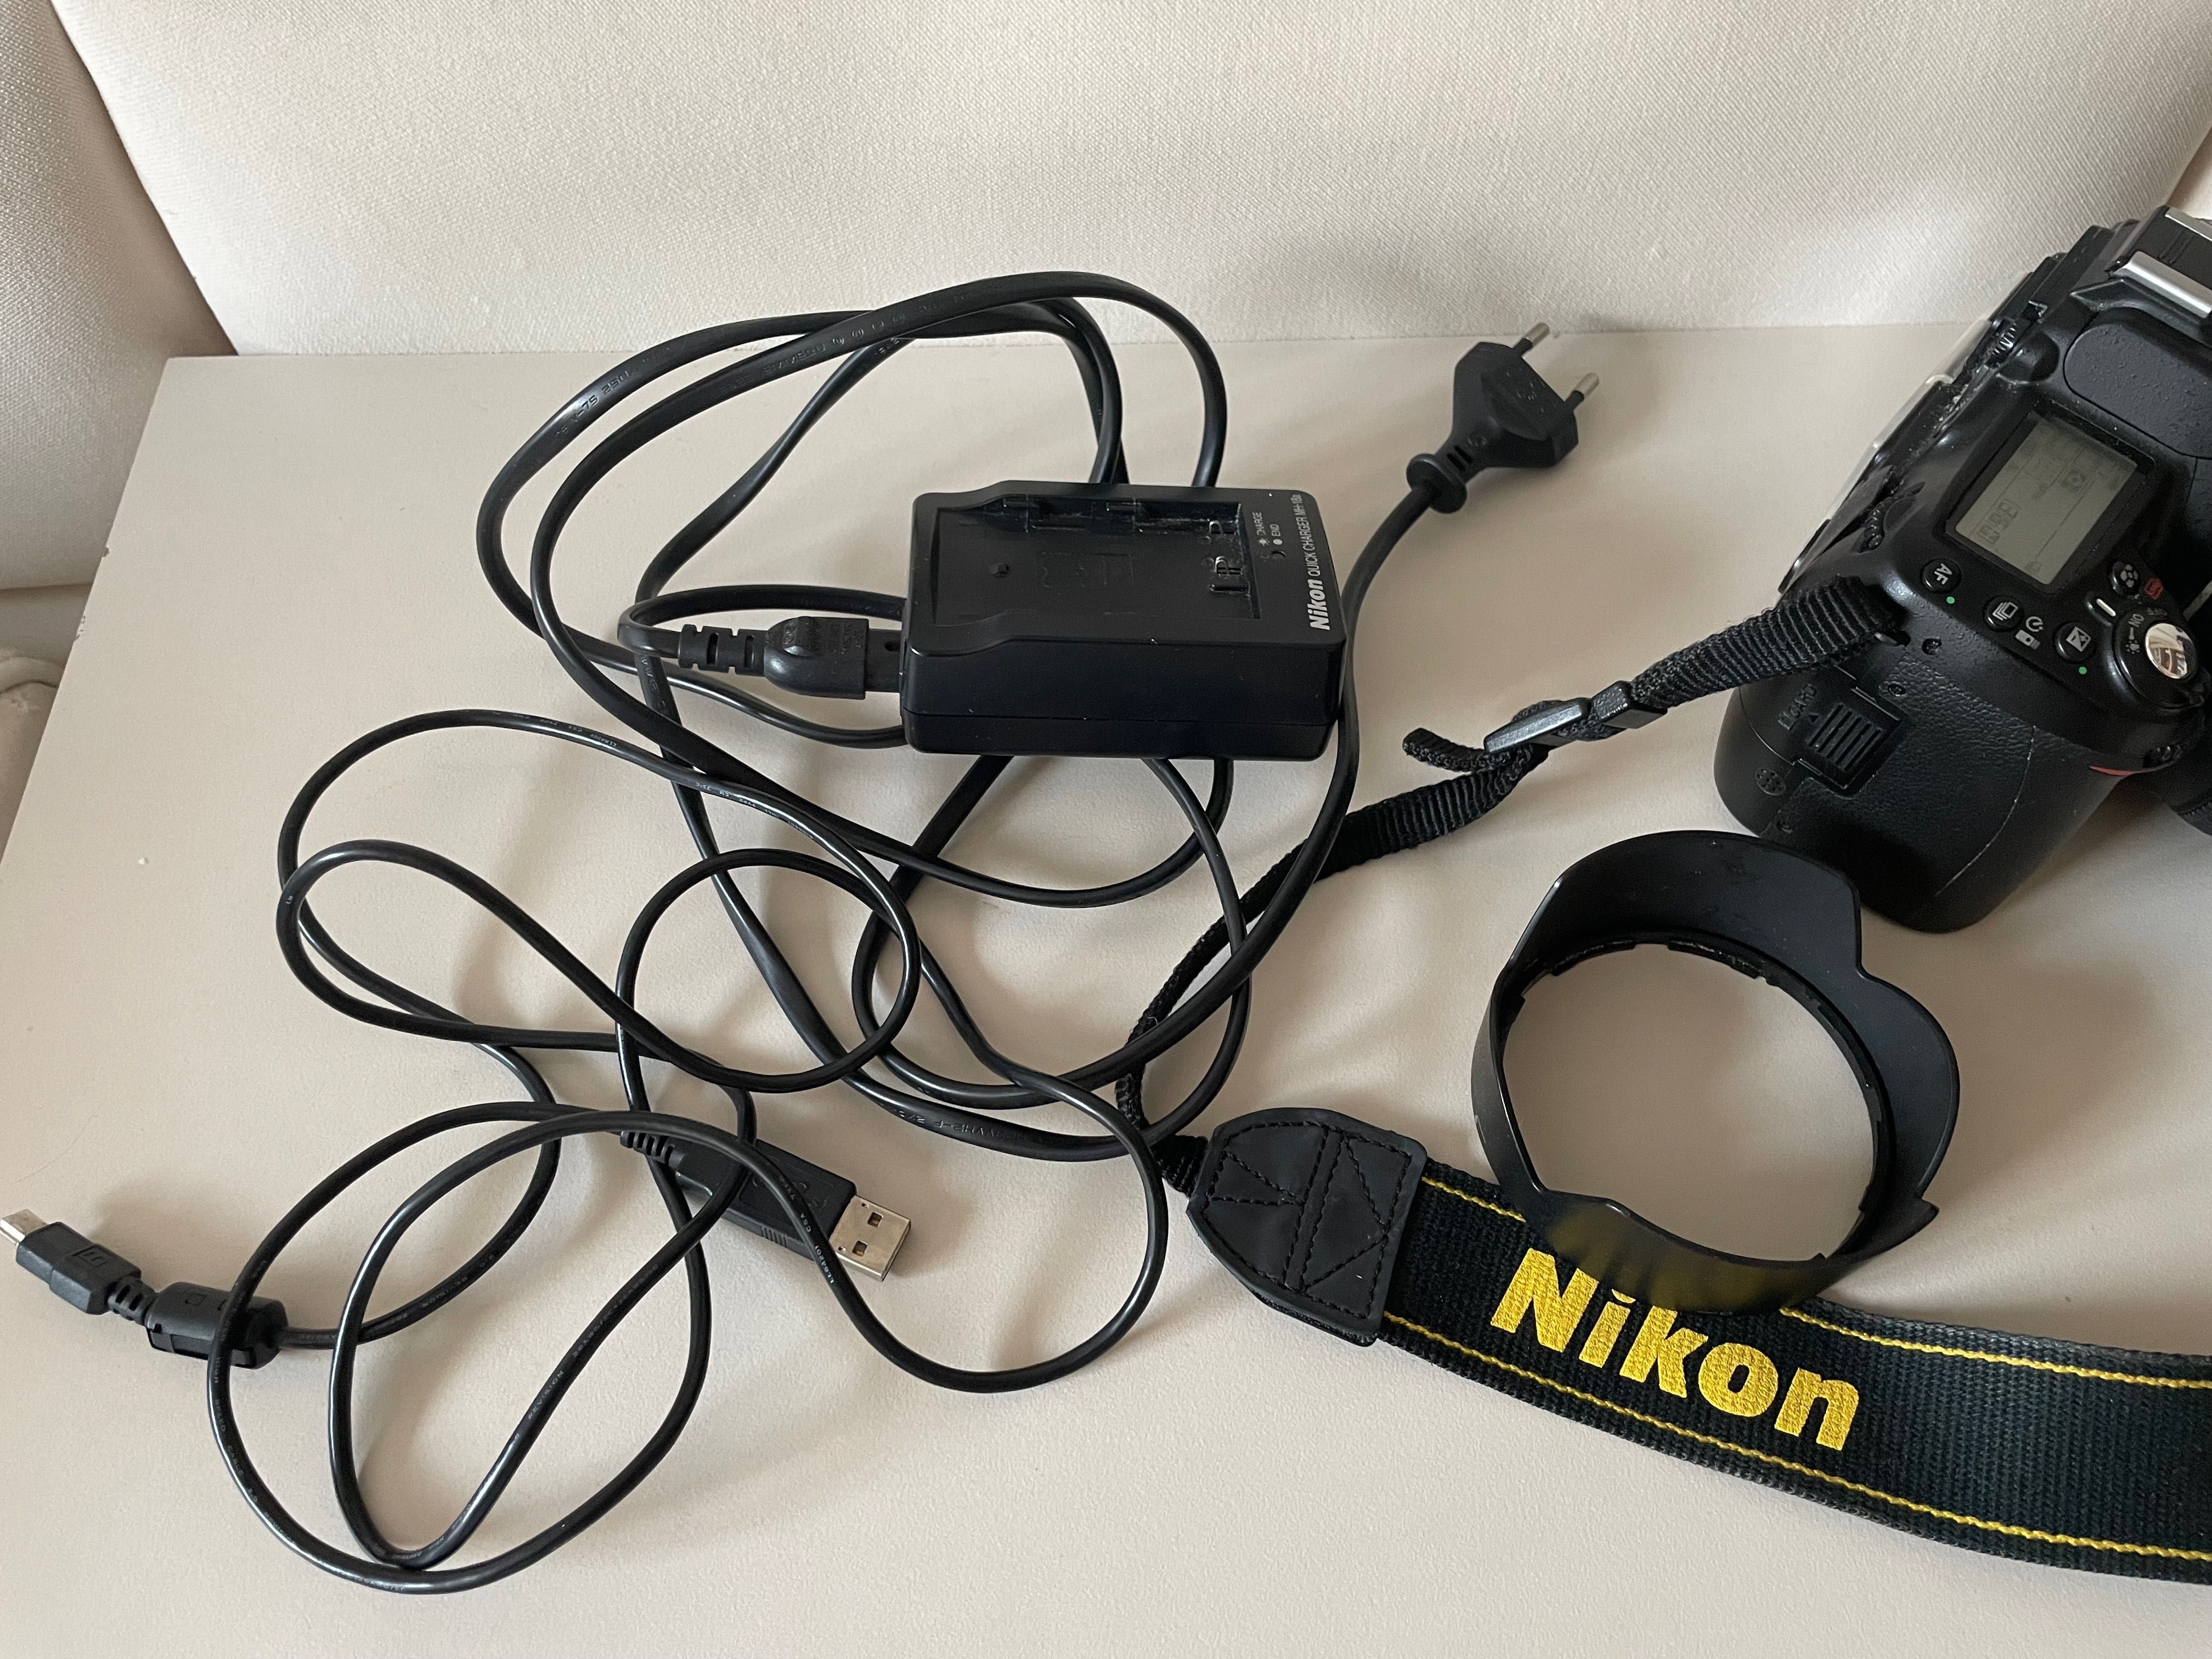 aparat fotograficzny NIKON D90